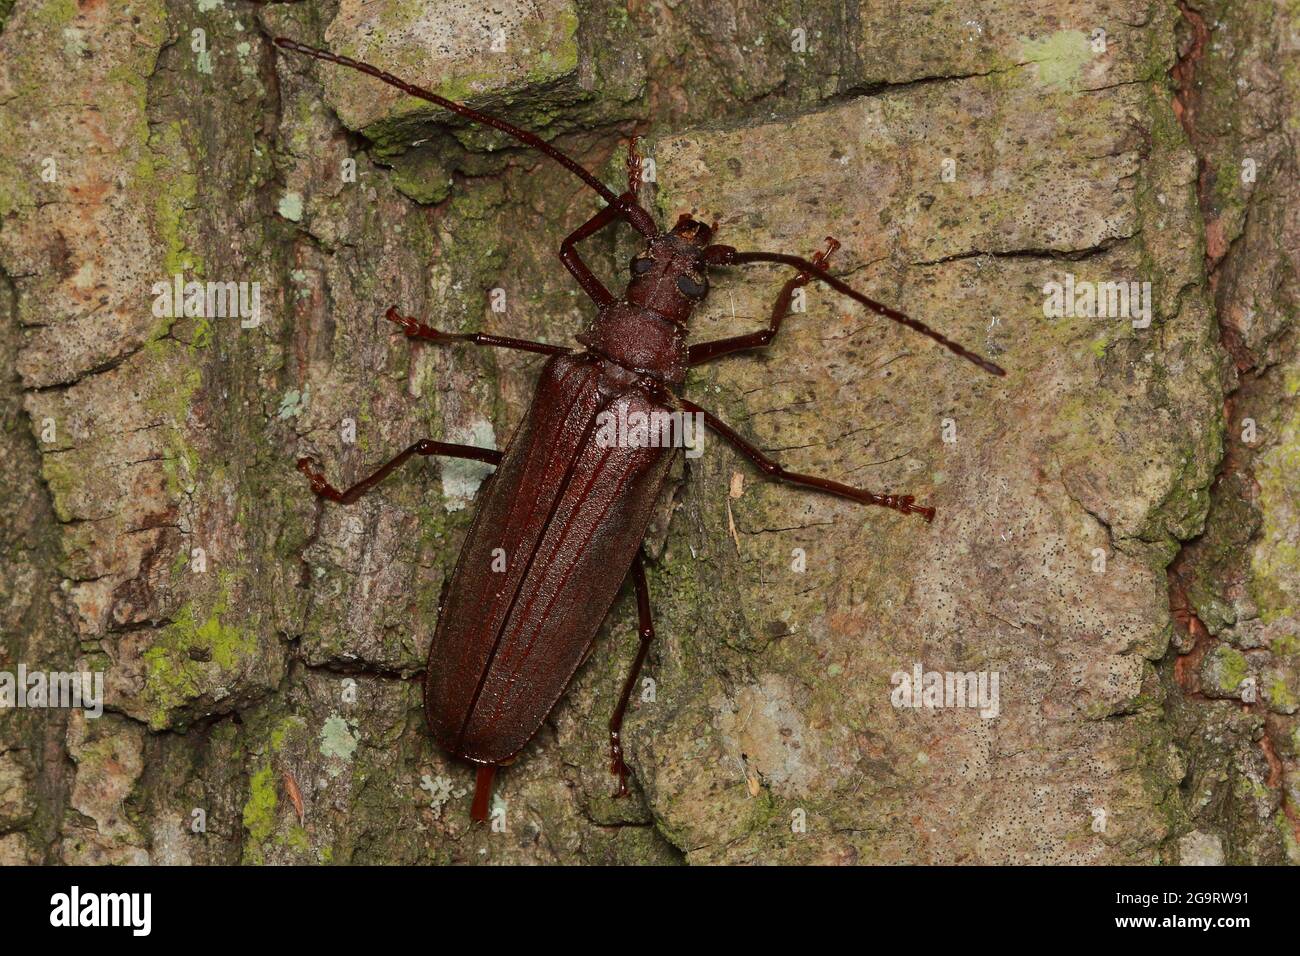 Aegosoma scabricorne - long-horned beetles female in natural habitat Stock Photo